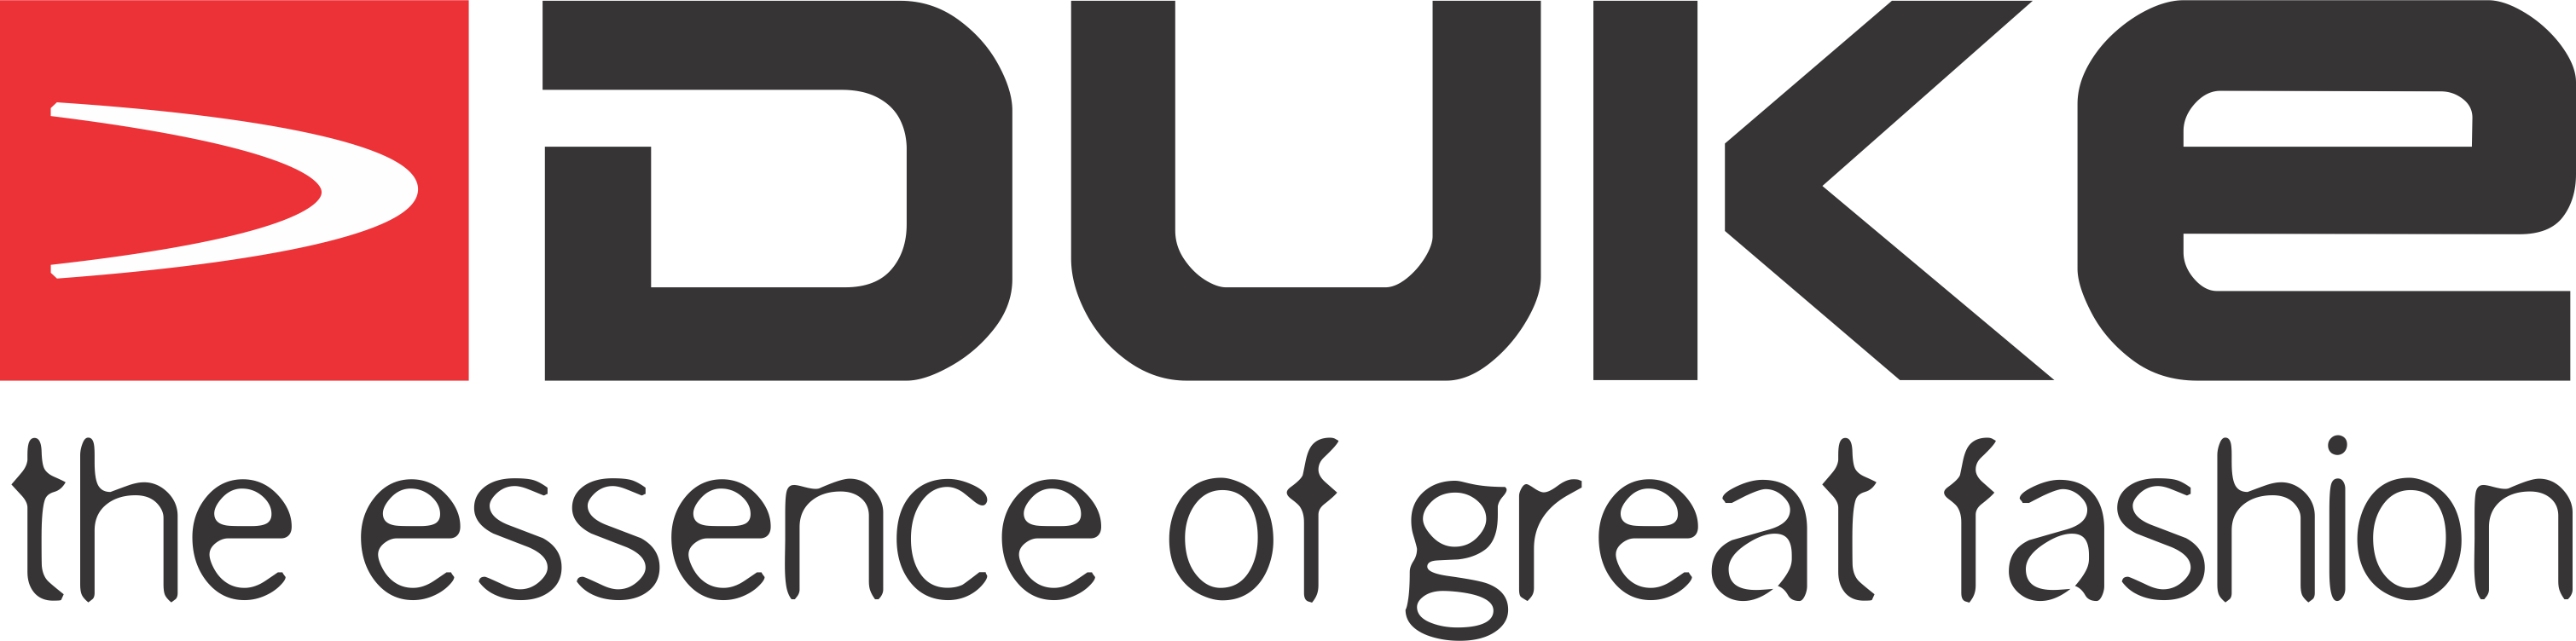 Duke Fashion Brand Logo PNG